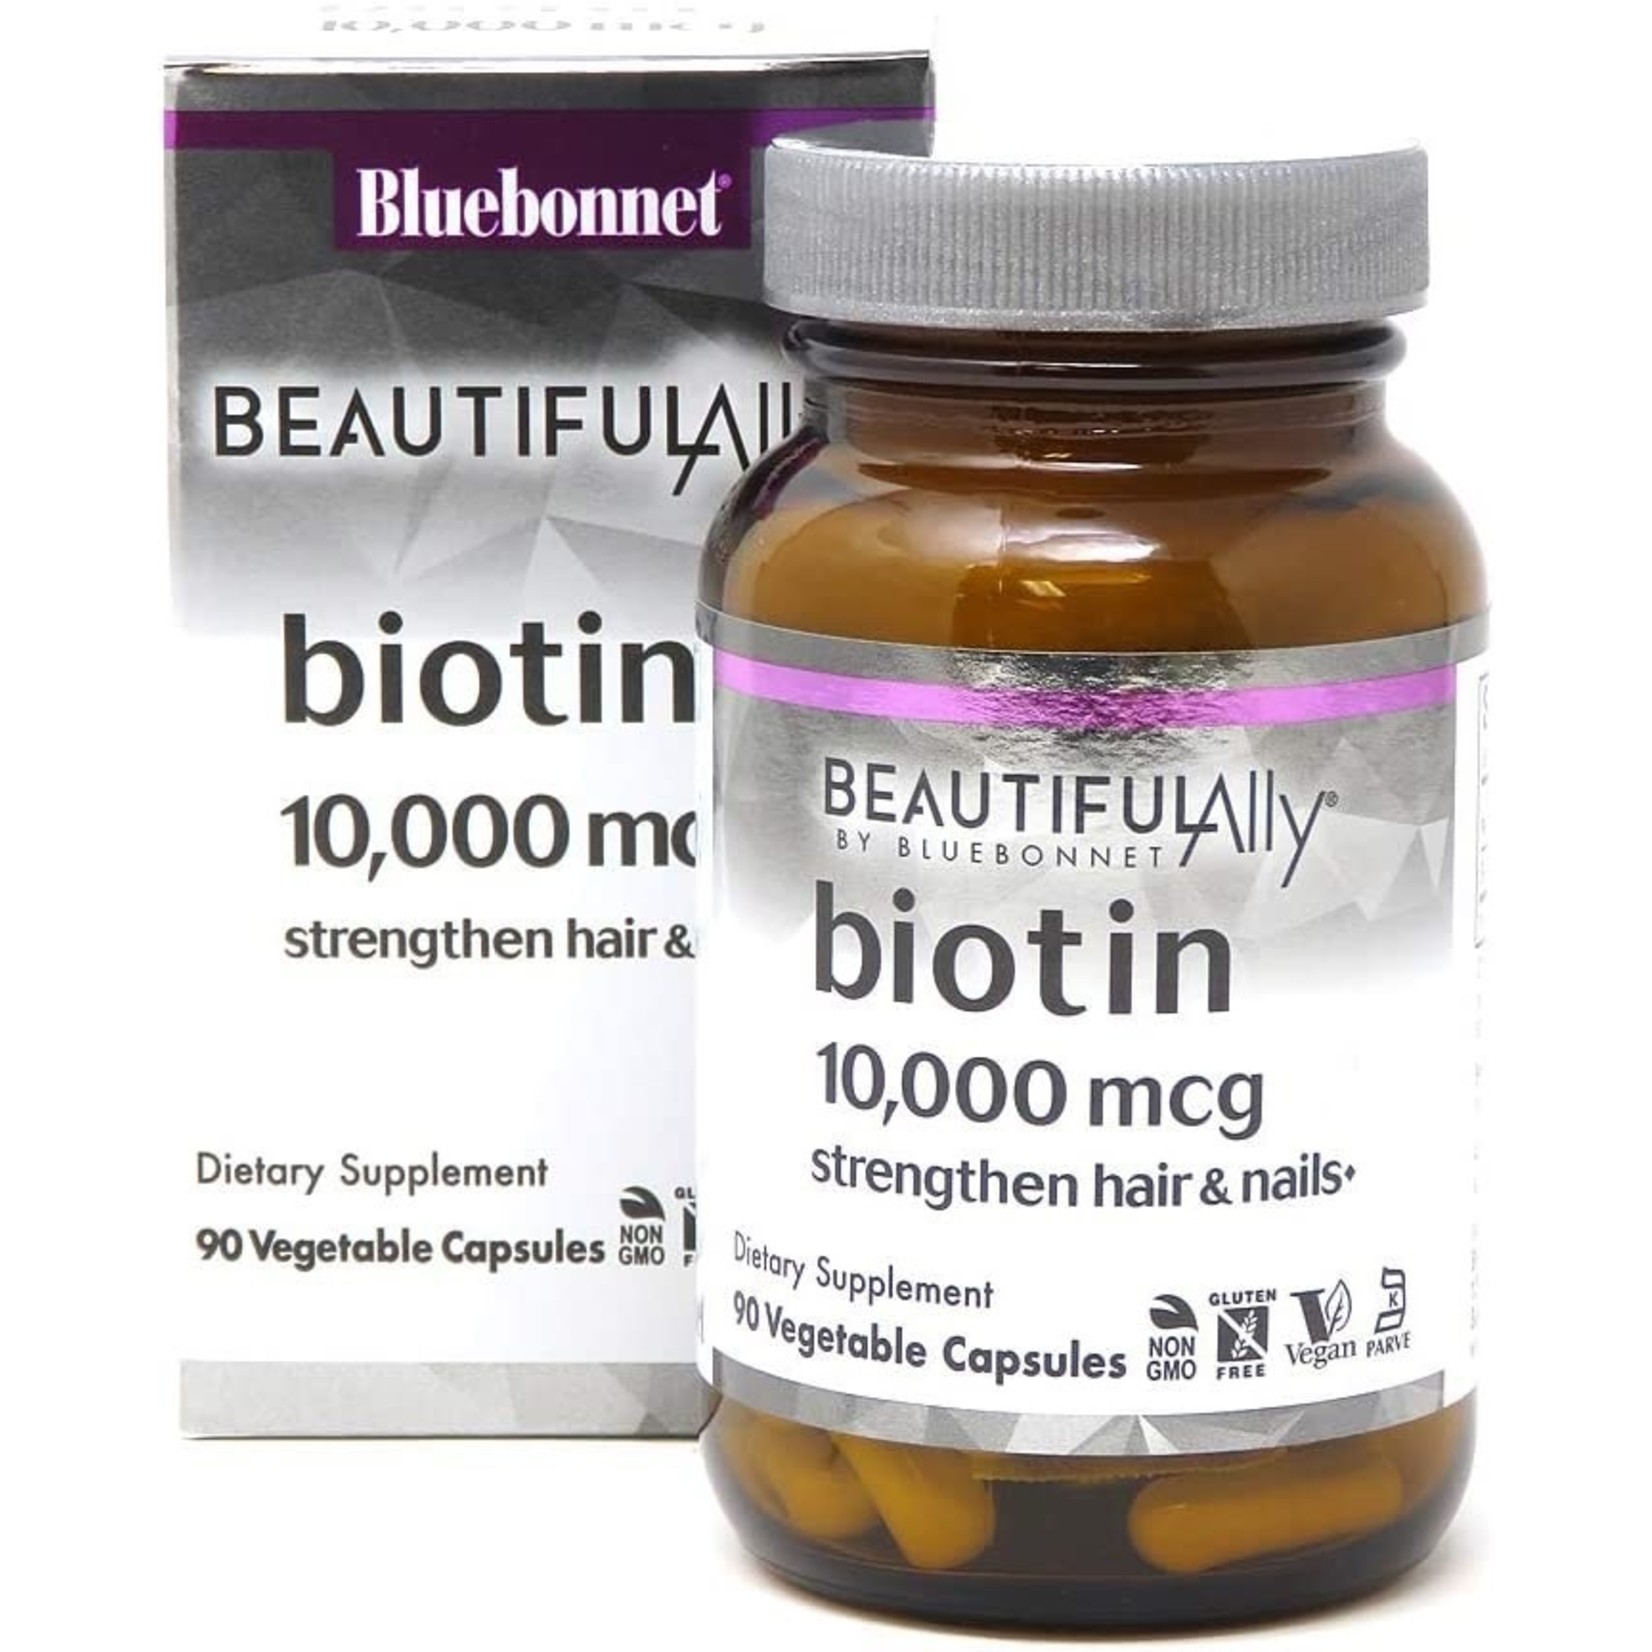 Bluebonnet Nutrition Bluebonnet Nutrition Beautiful Ally Biotin 10,000mcg 90 Vegetable Capsules